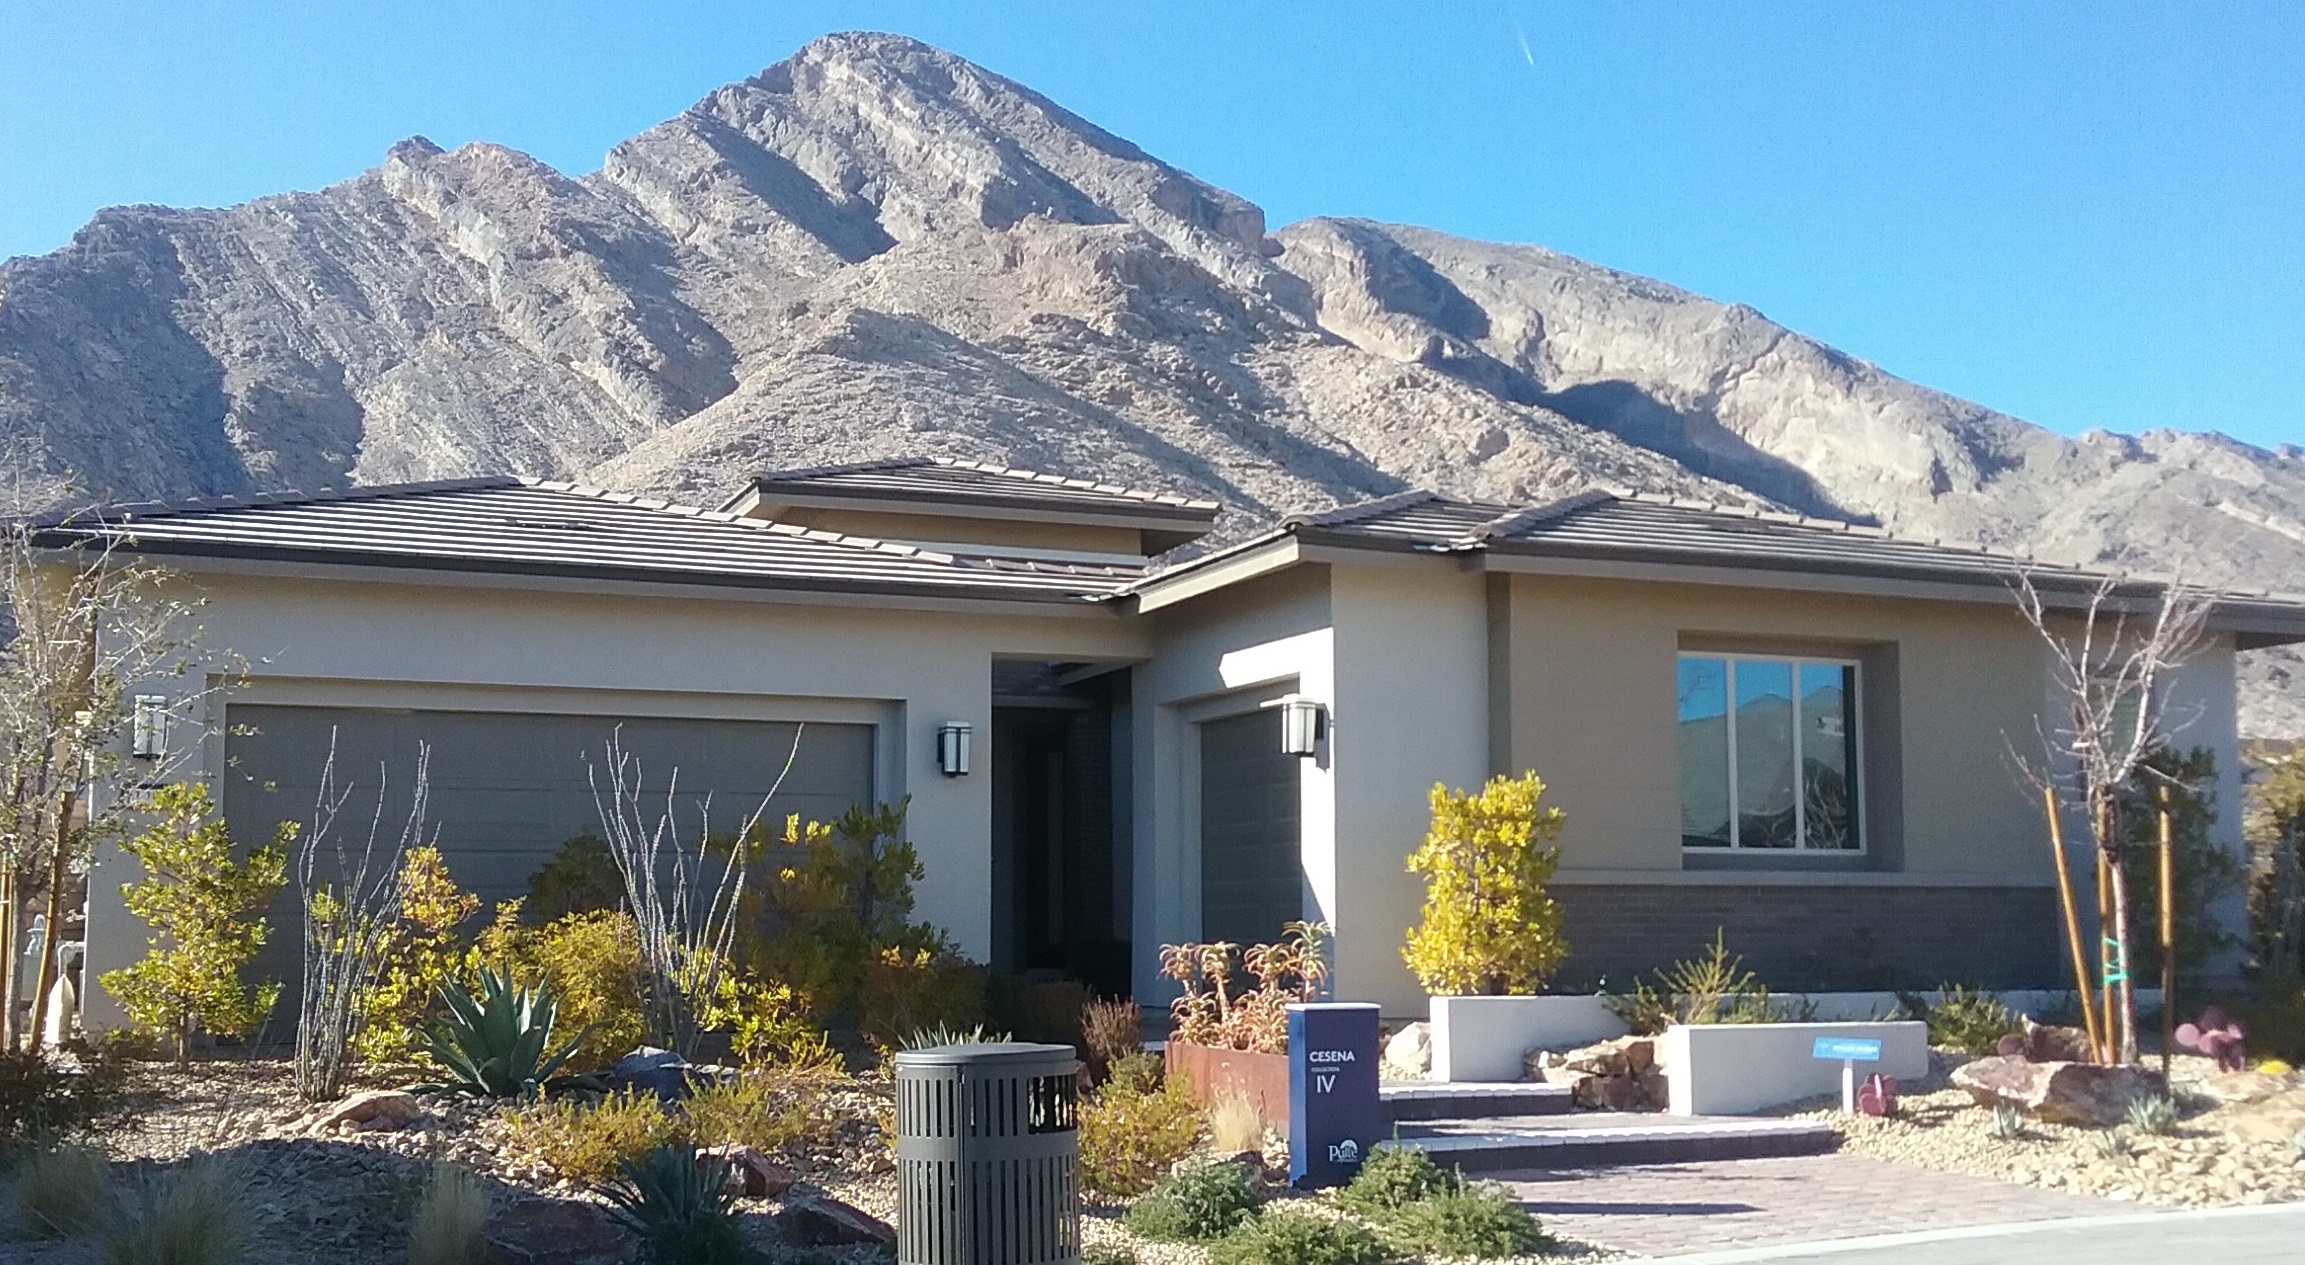 Summerlin Las Vegas. FREE List of New Homes Under 500K